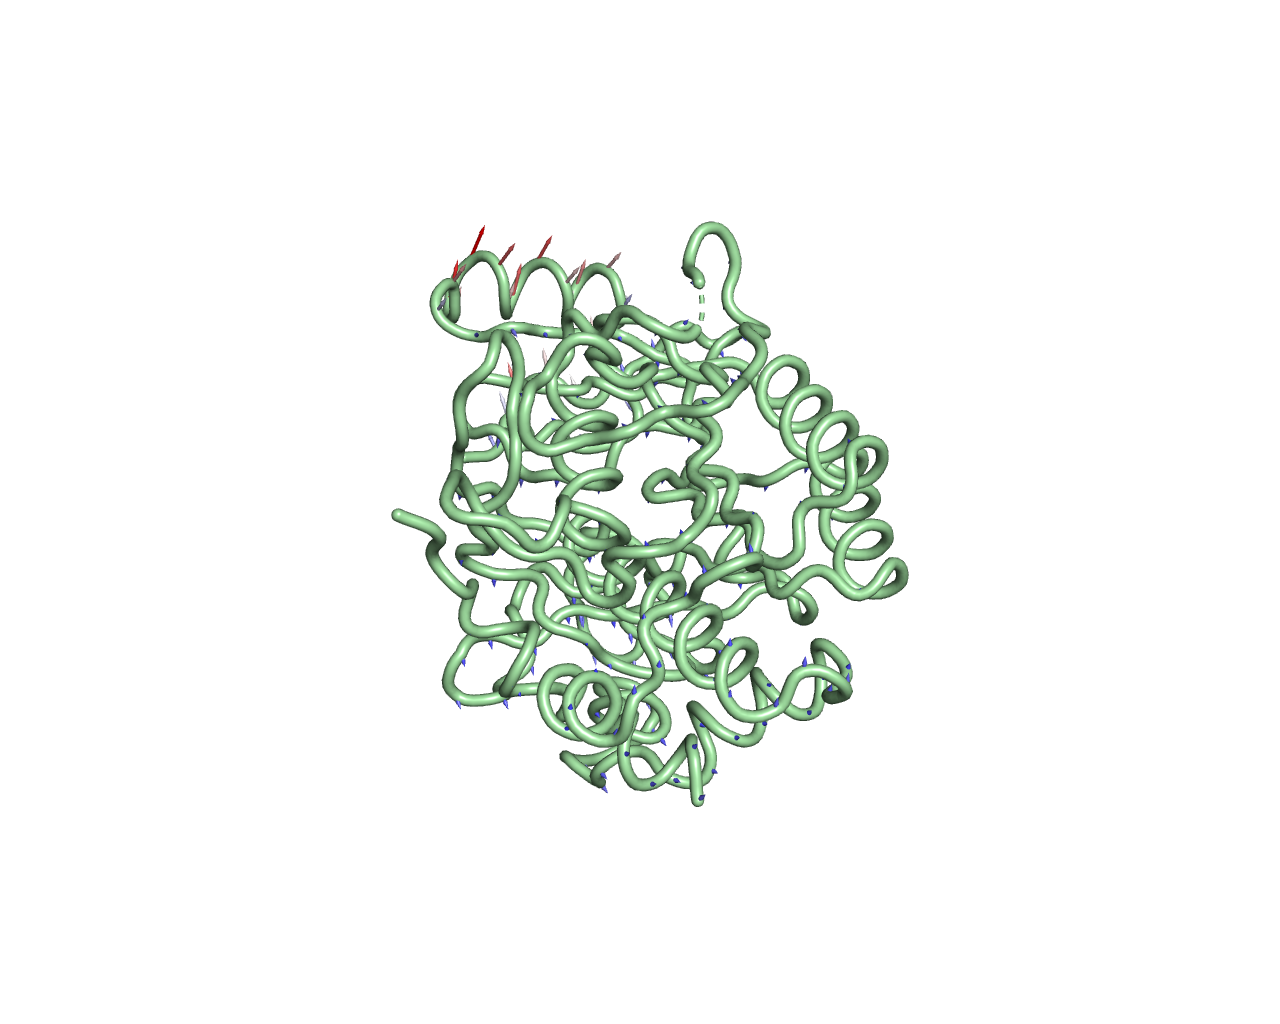 Protein-Protein Interaction